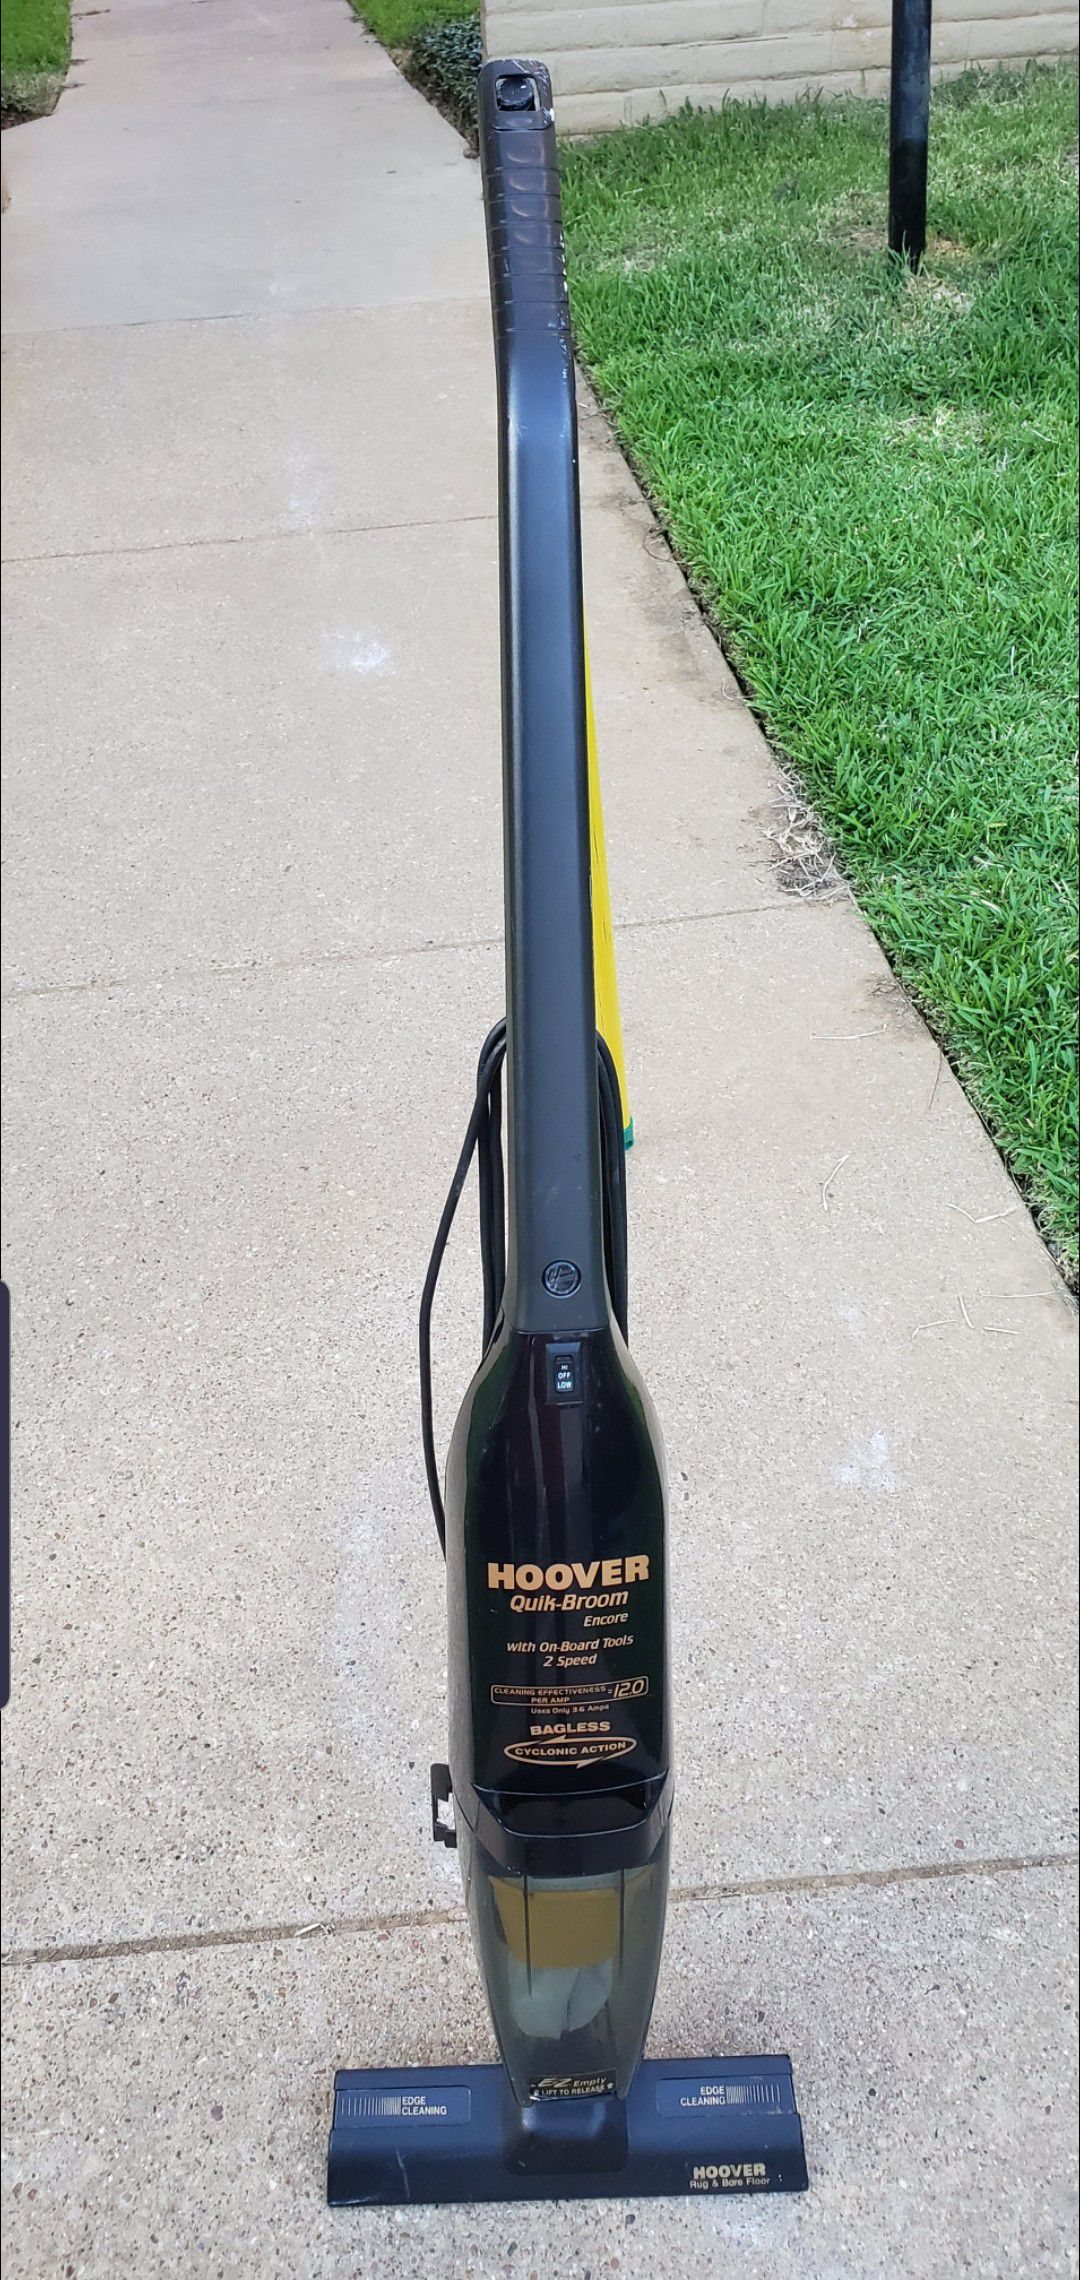 hoover quick broom bagless vacuum cleaner.